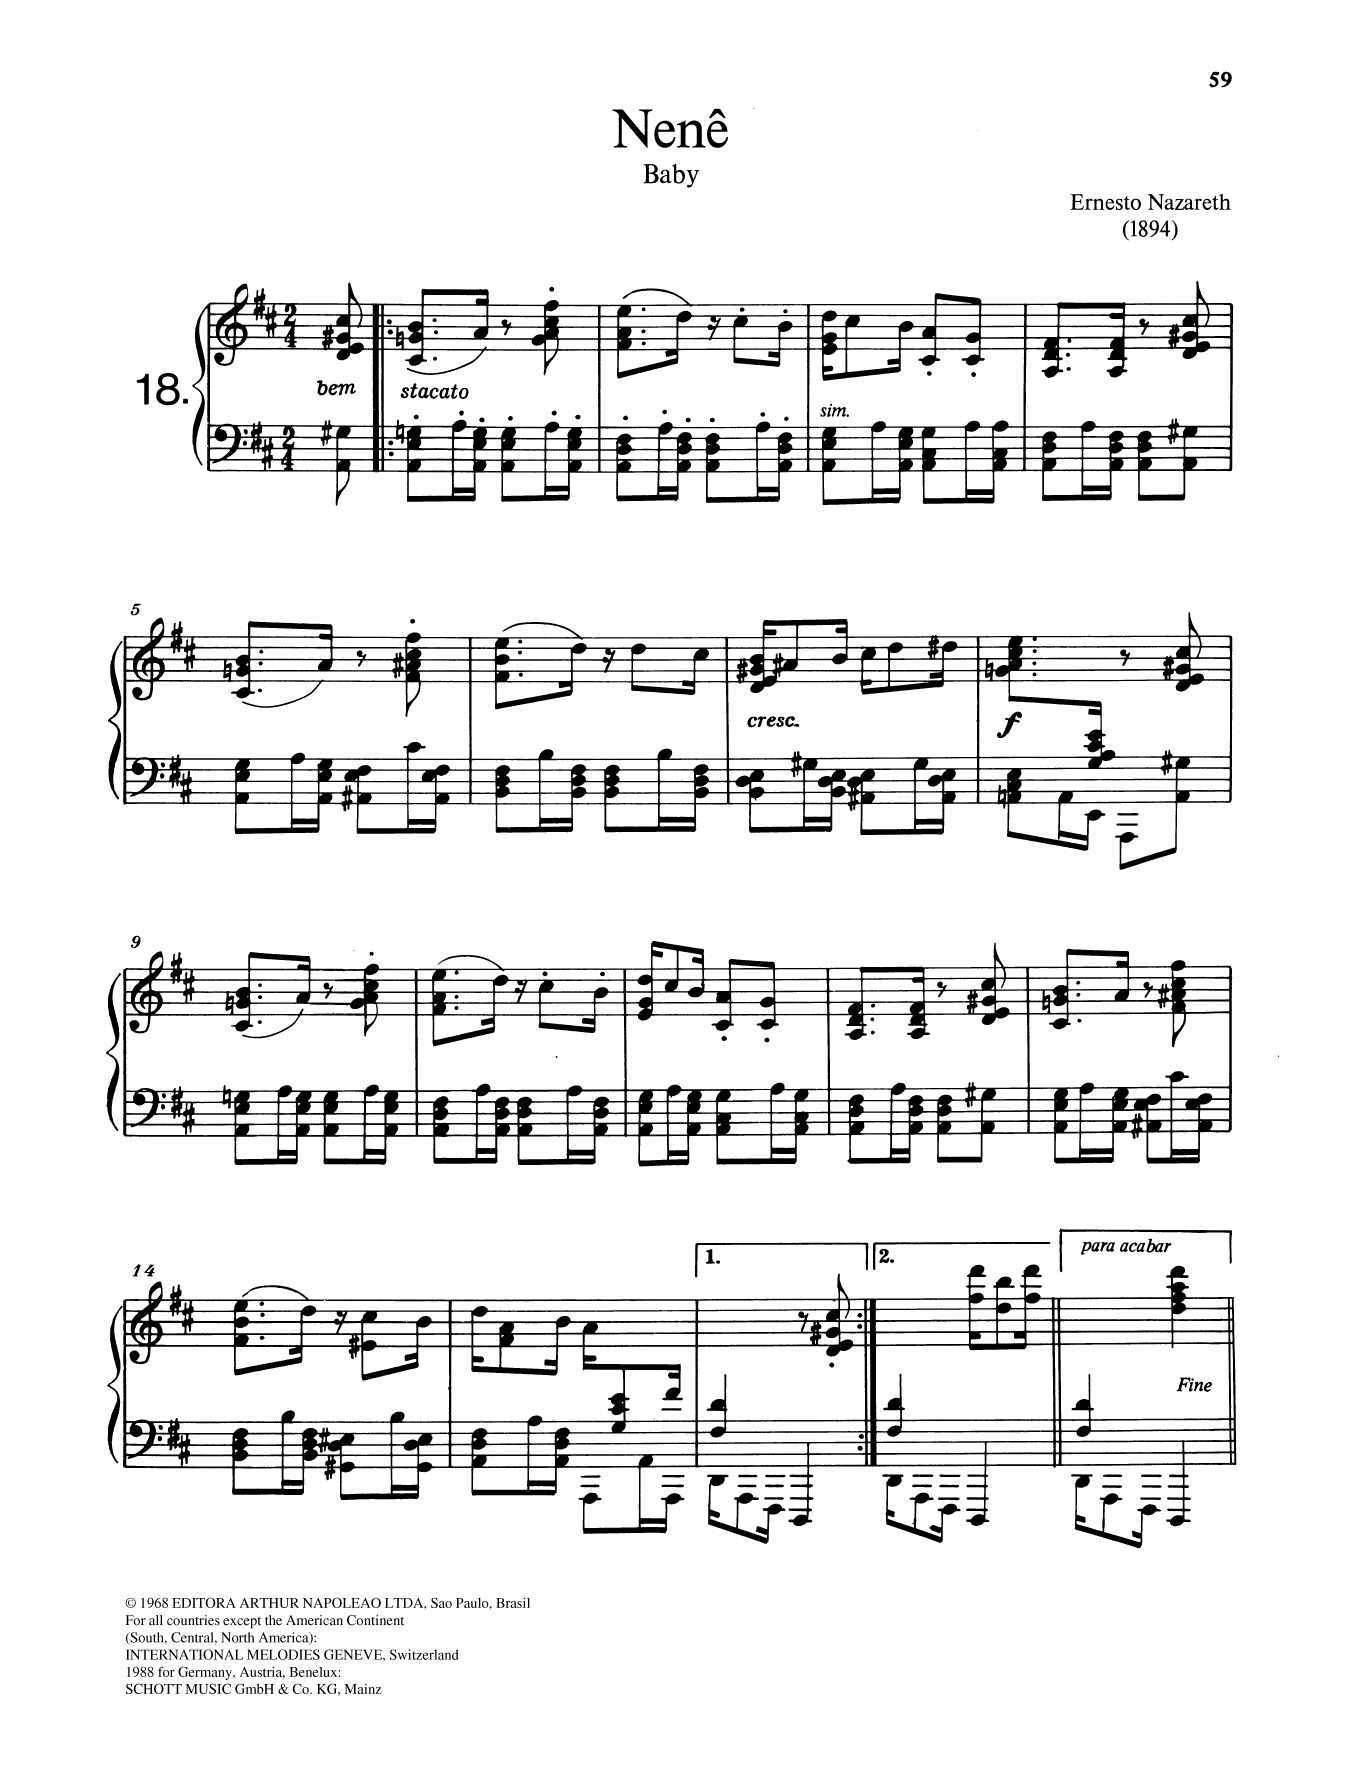 Ernesto Nazareth Nenê Sheet Music Notes & Chords for Piano Solo - Download or Print PDF